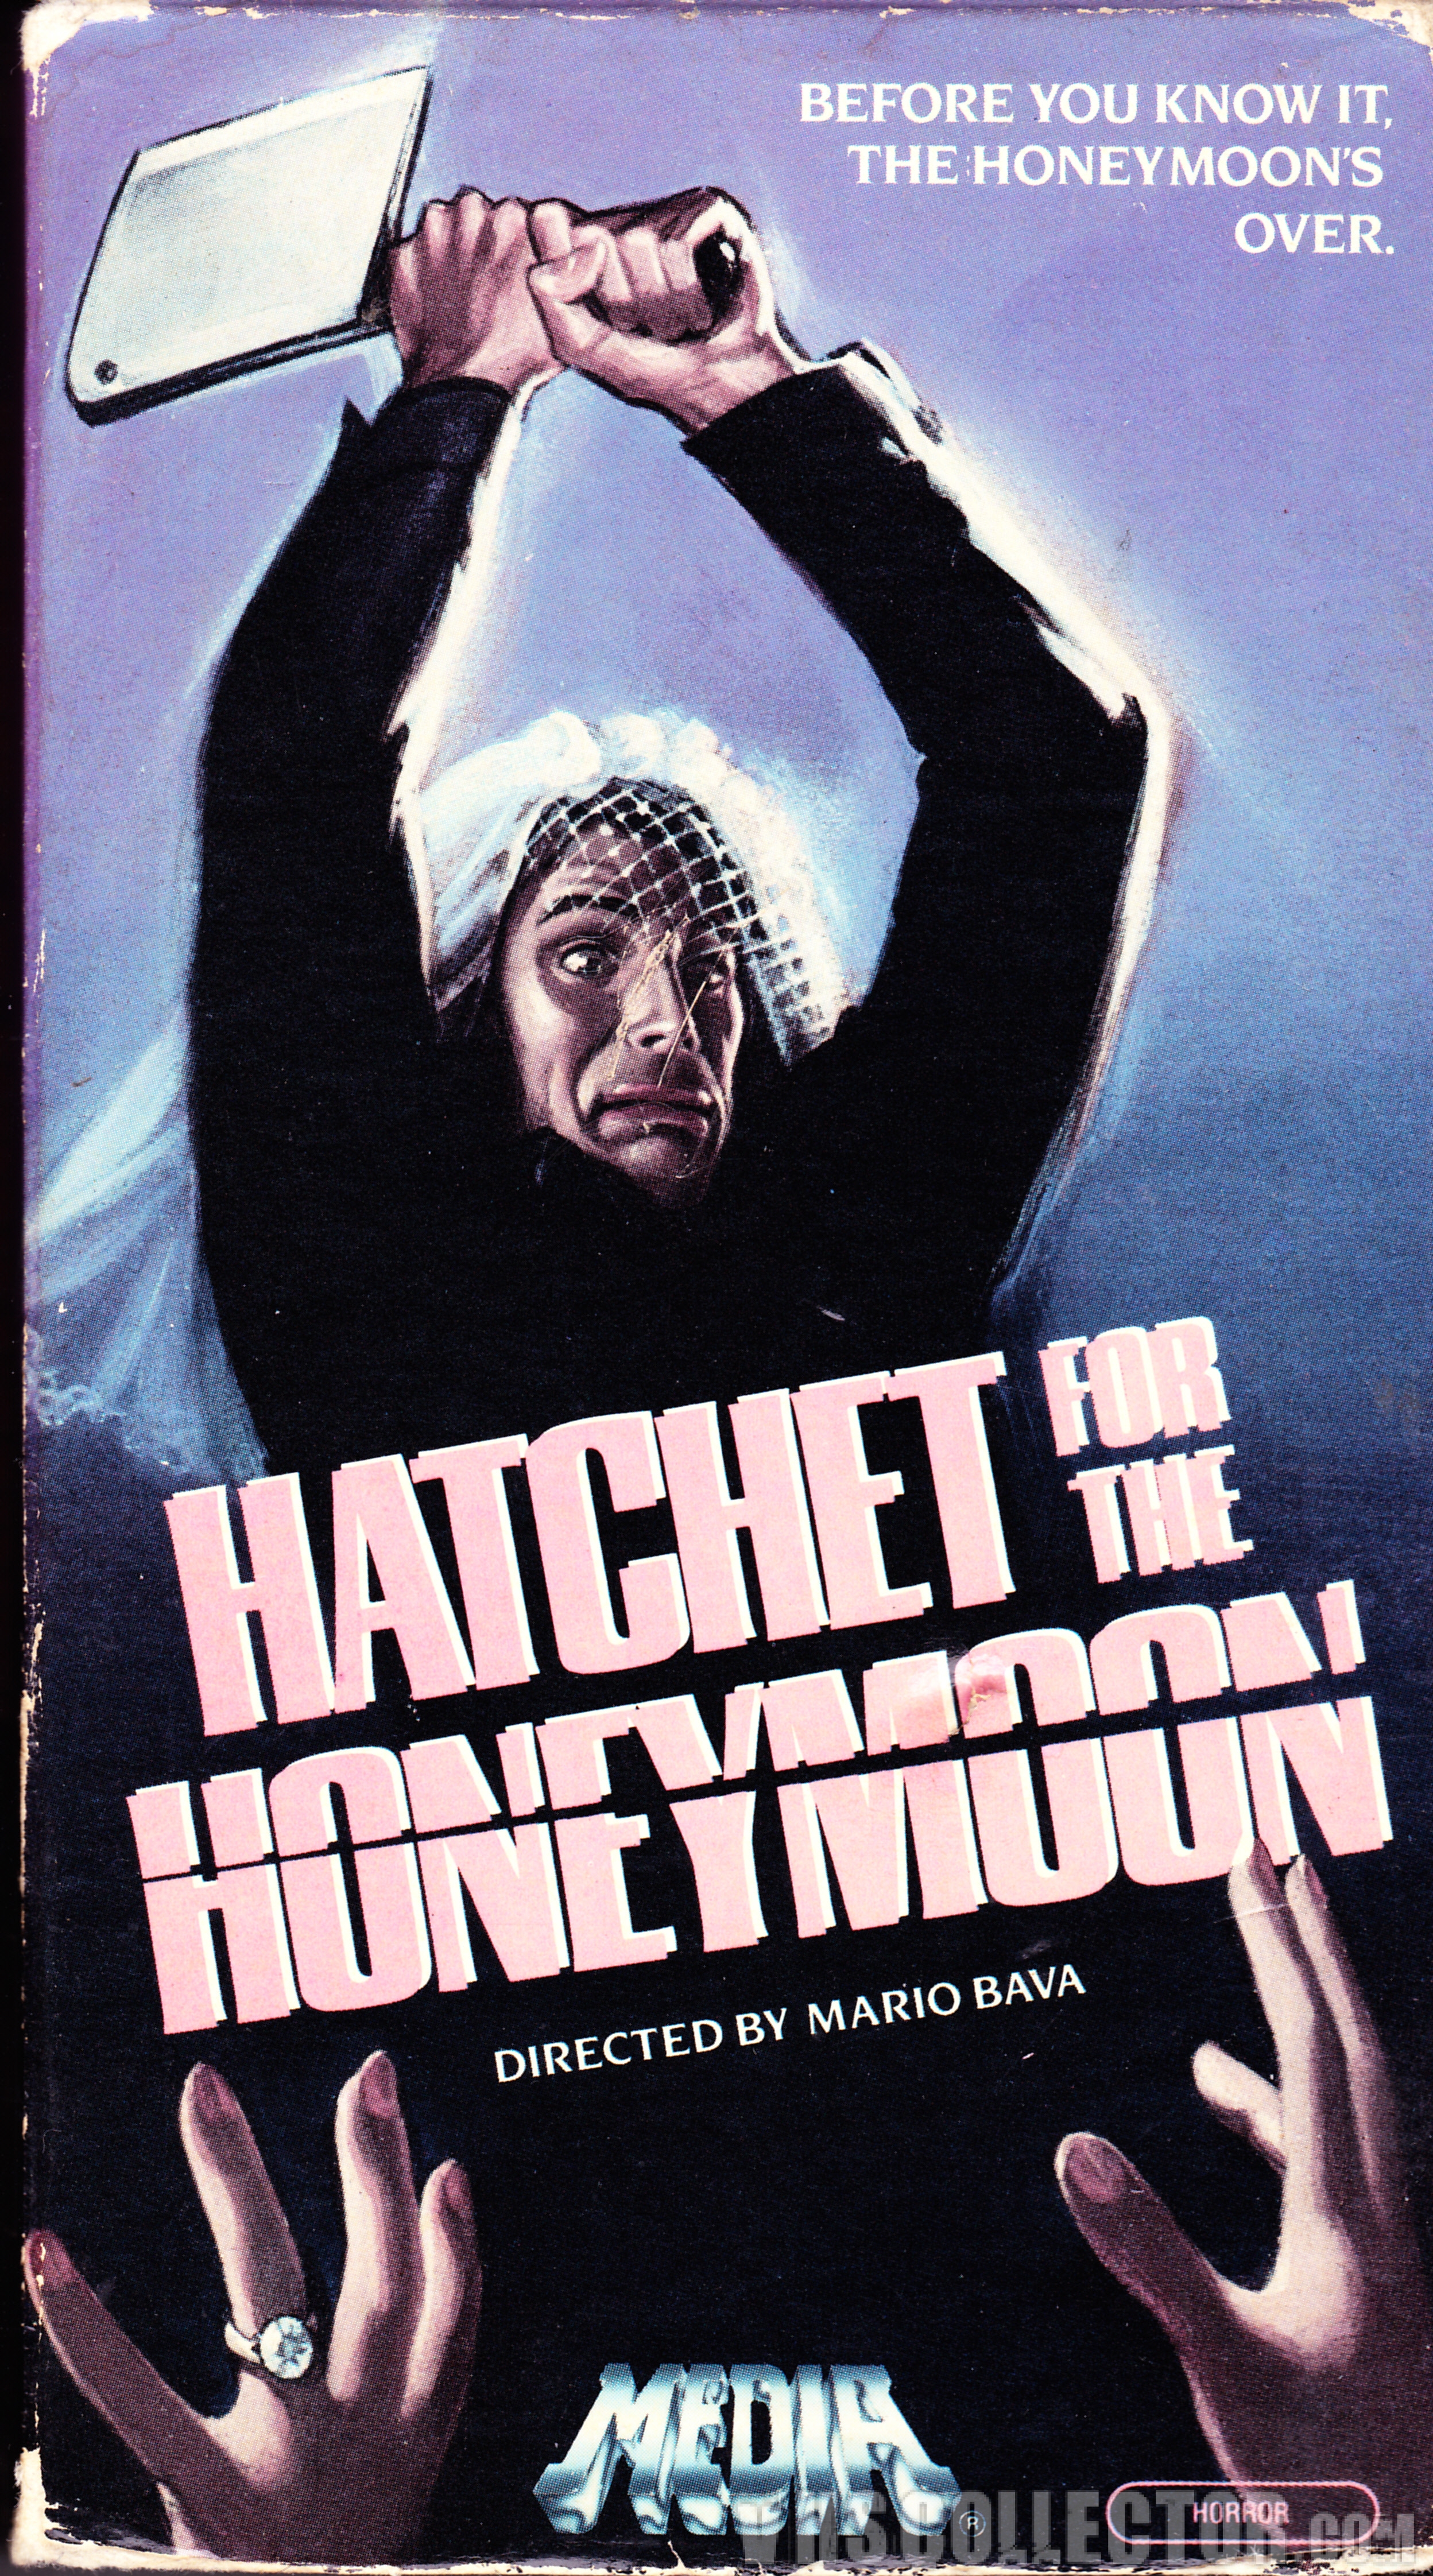 Hatchet for the Honeymoon | VHSCollector.com